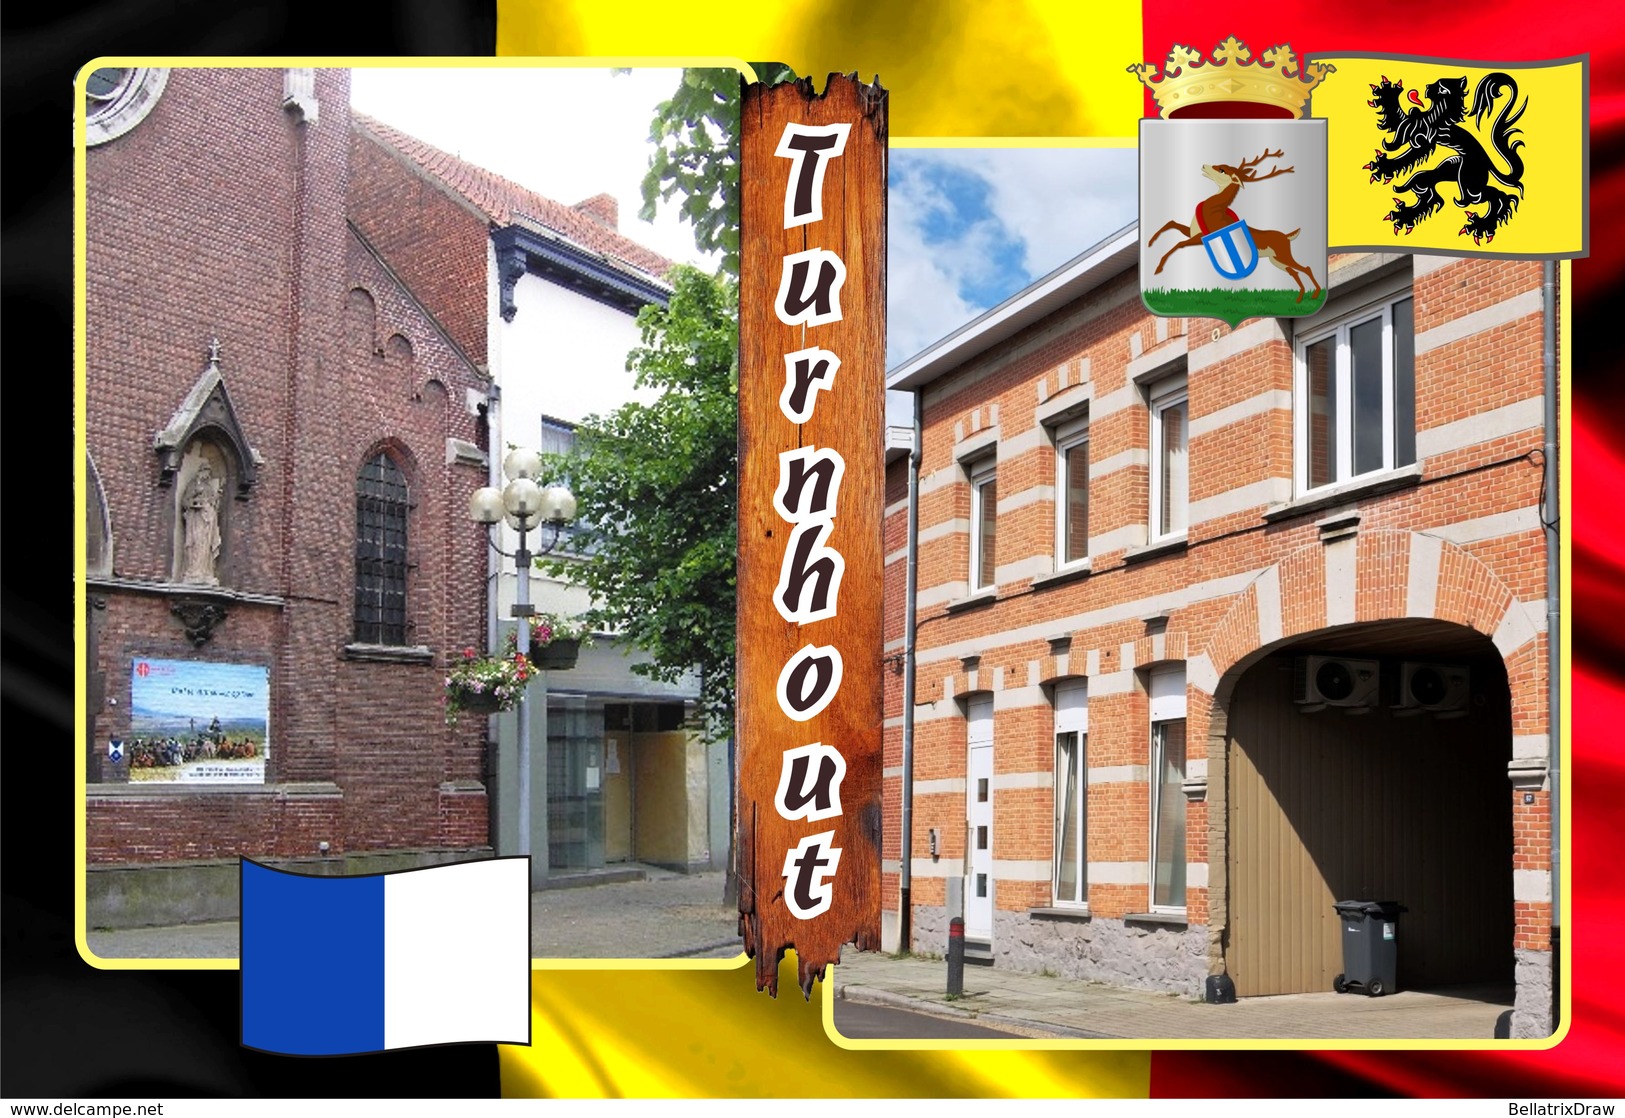 Postcards, REPRODUCTION, Municipalities of Belgium, Turnhout, duplex 92 to 139 - set of 48 pcs.